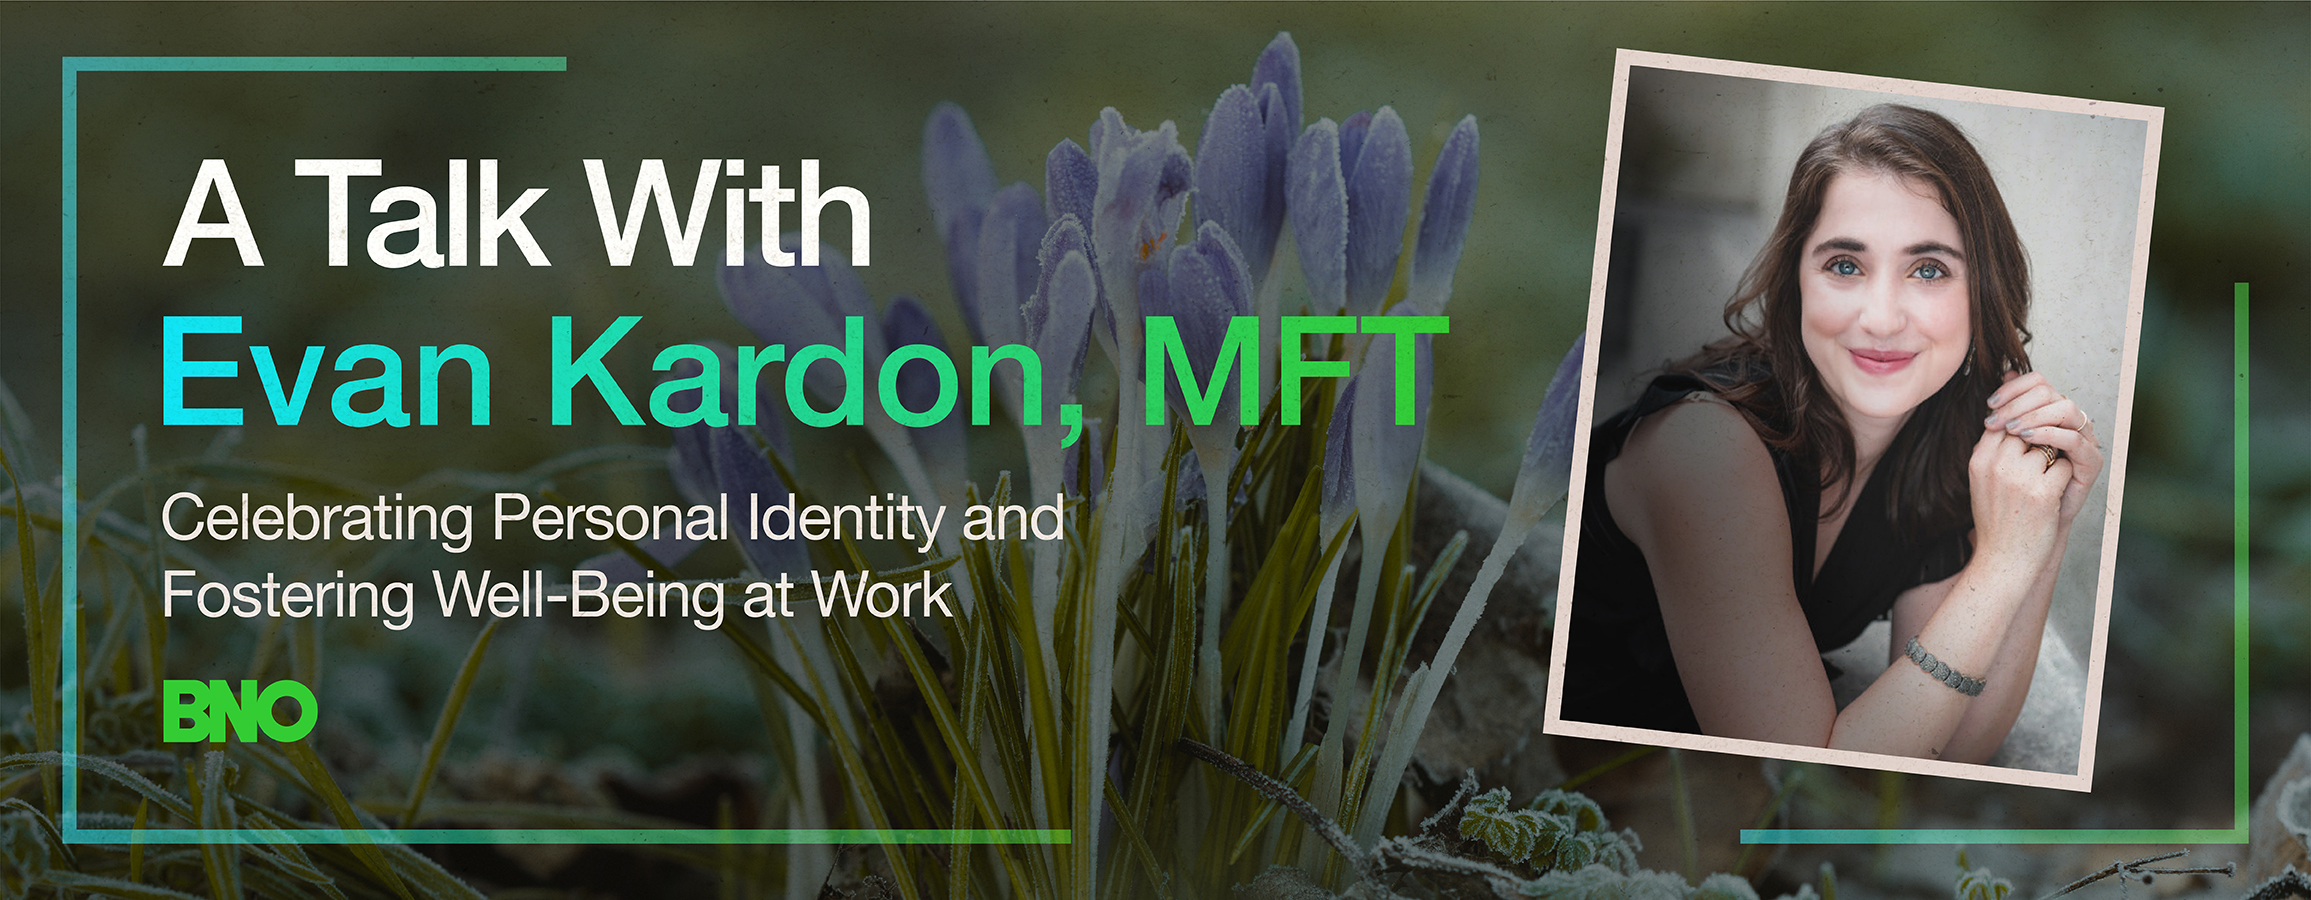 A Talk With Evan Kardon, MFT, with a picture of Kardon.